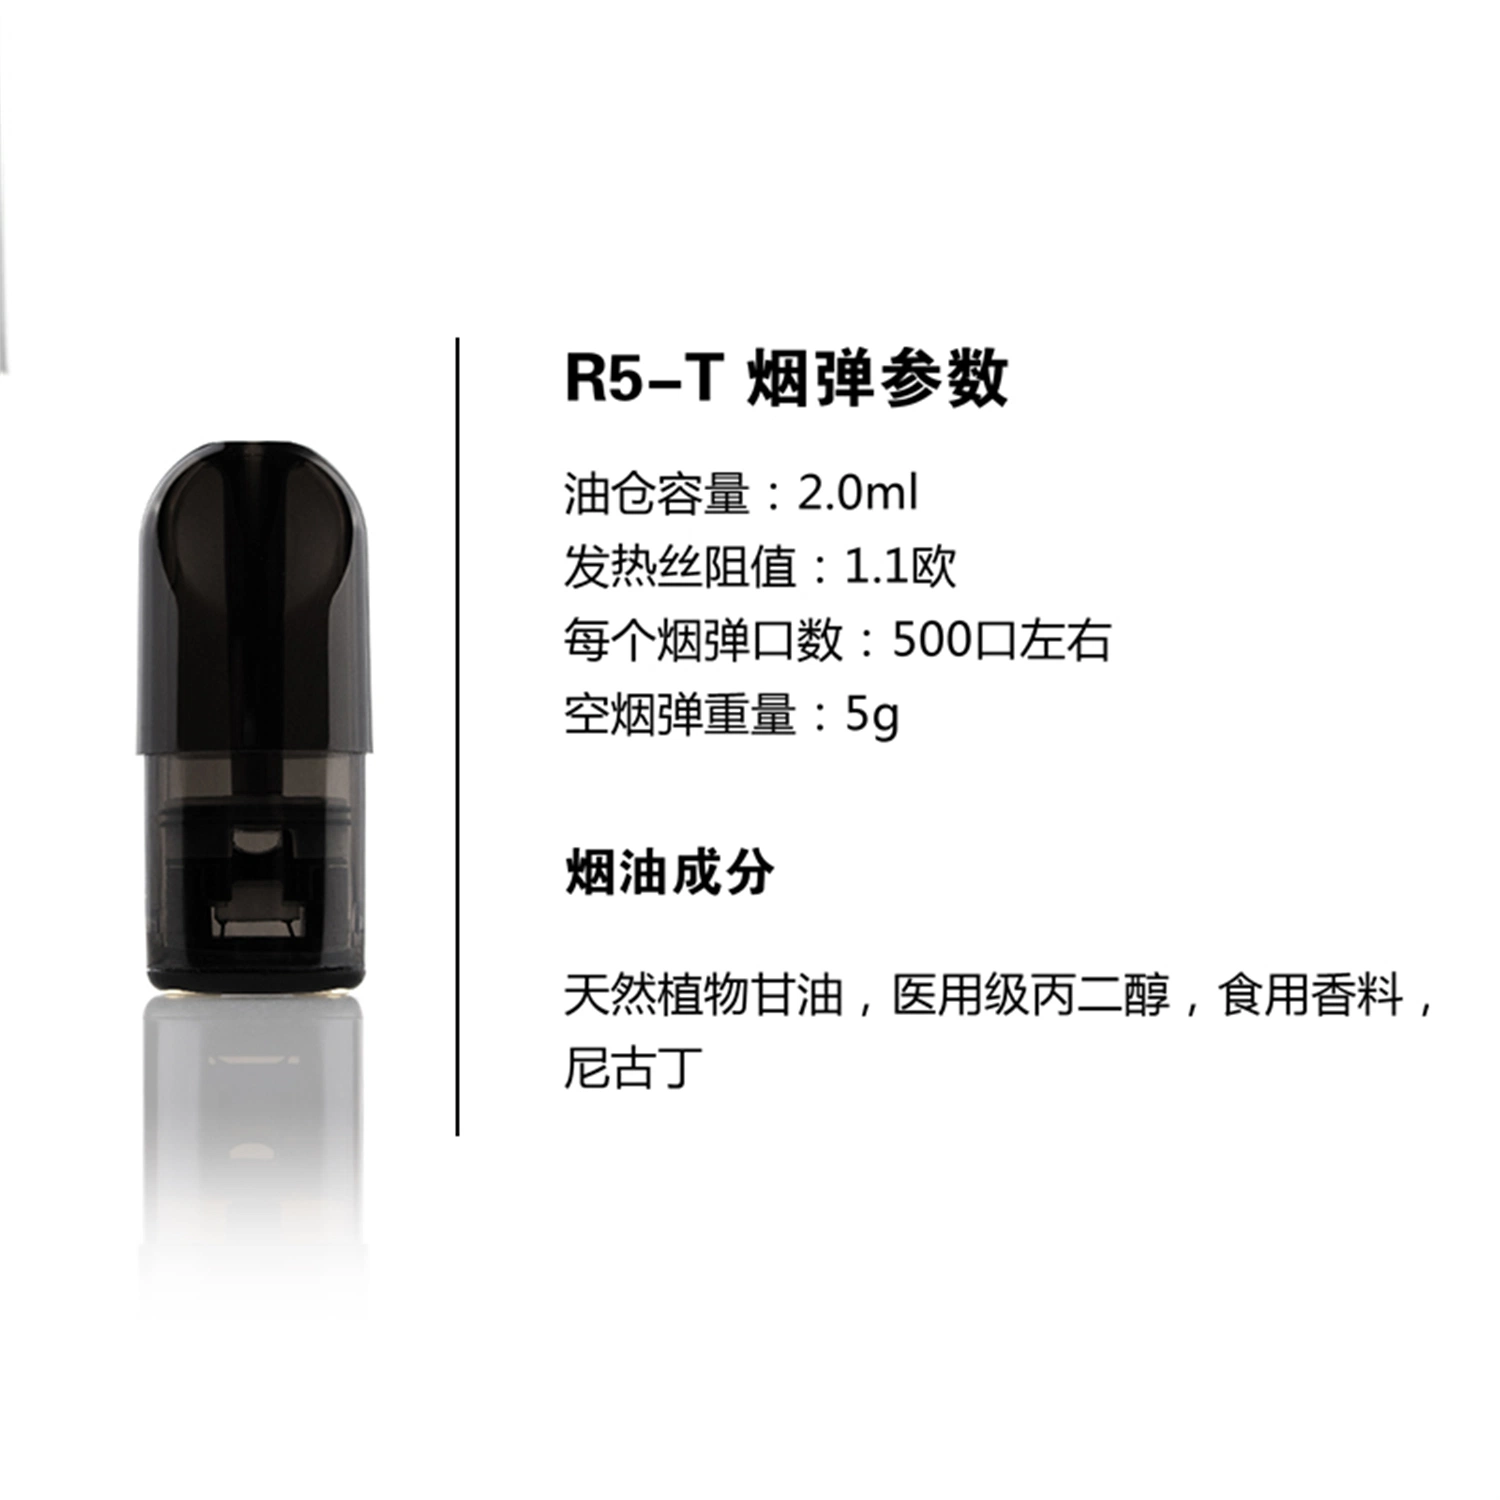 Kamry R5 Pod Vapers Smoke Device Refilled Electronic Vaporizer Vape Pen 500puff Electronic Cigarette